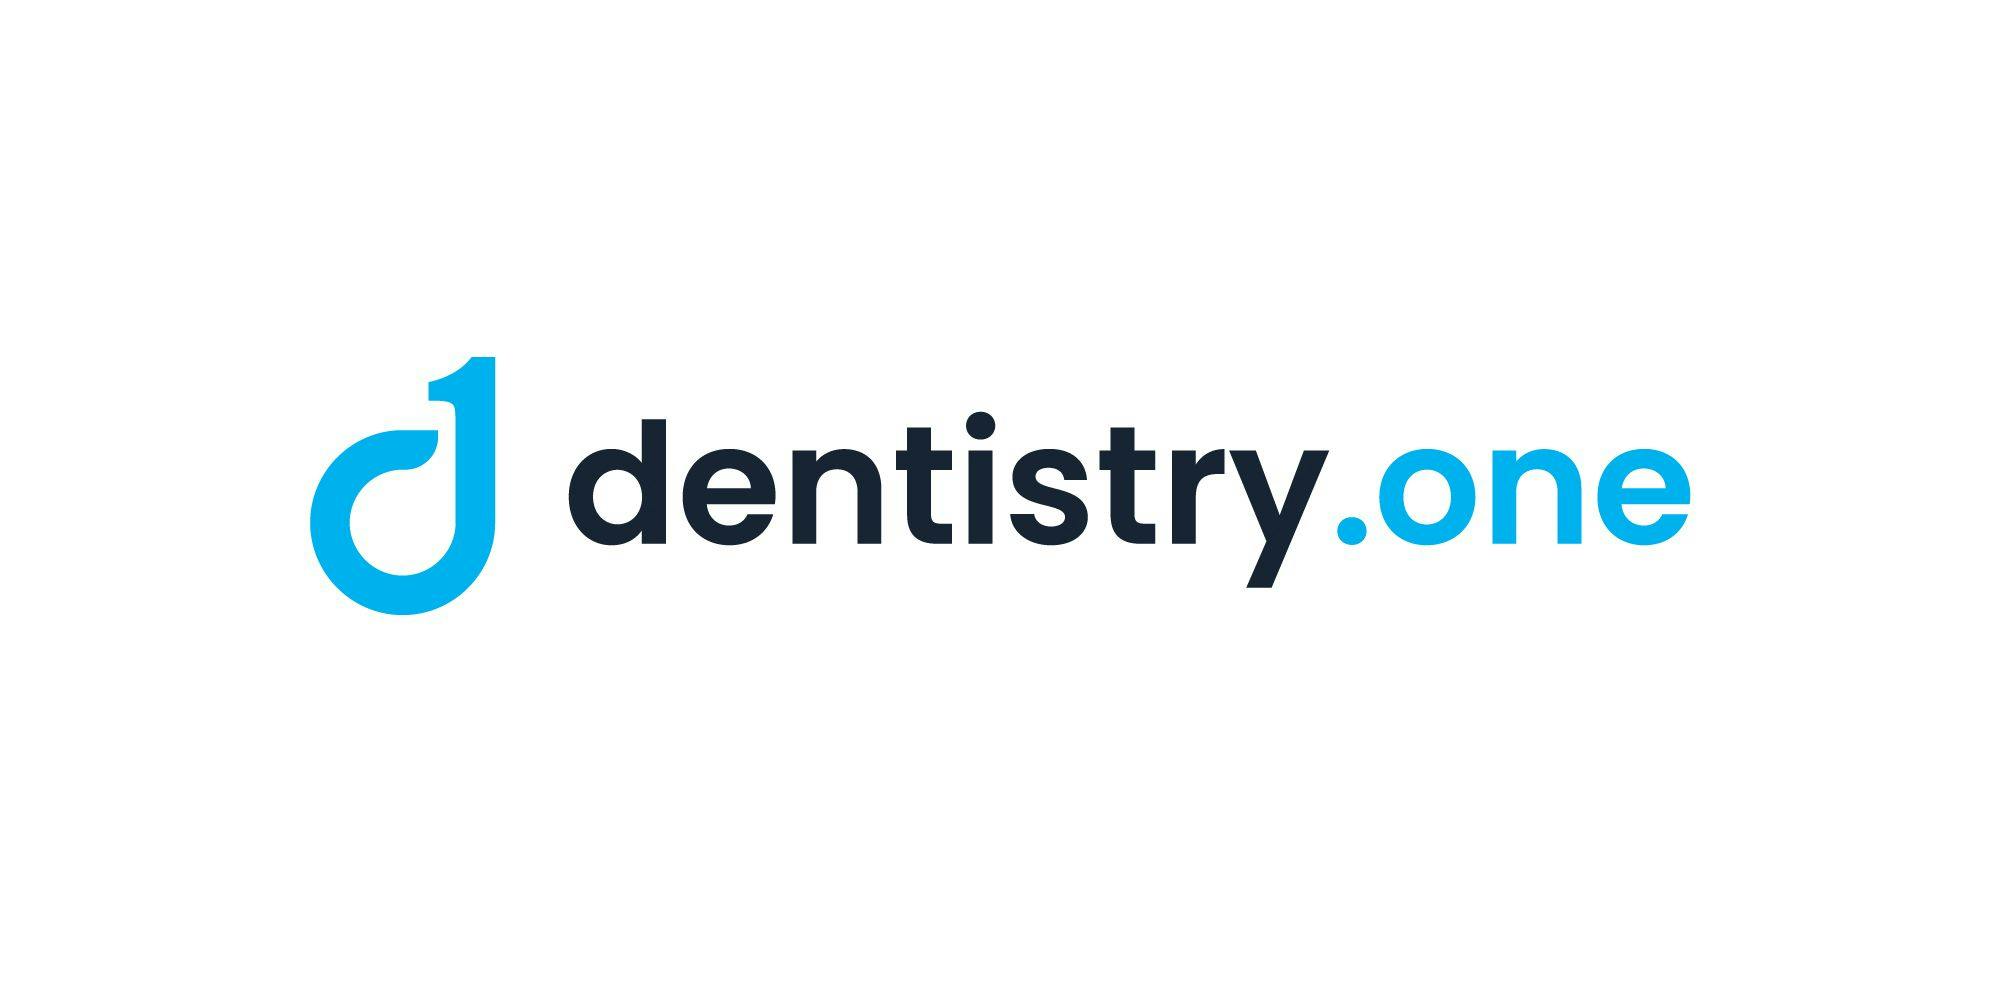 Dentistry.One, Kare Mobile Partner for Georgia Amerigroup Members